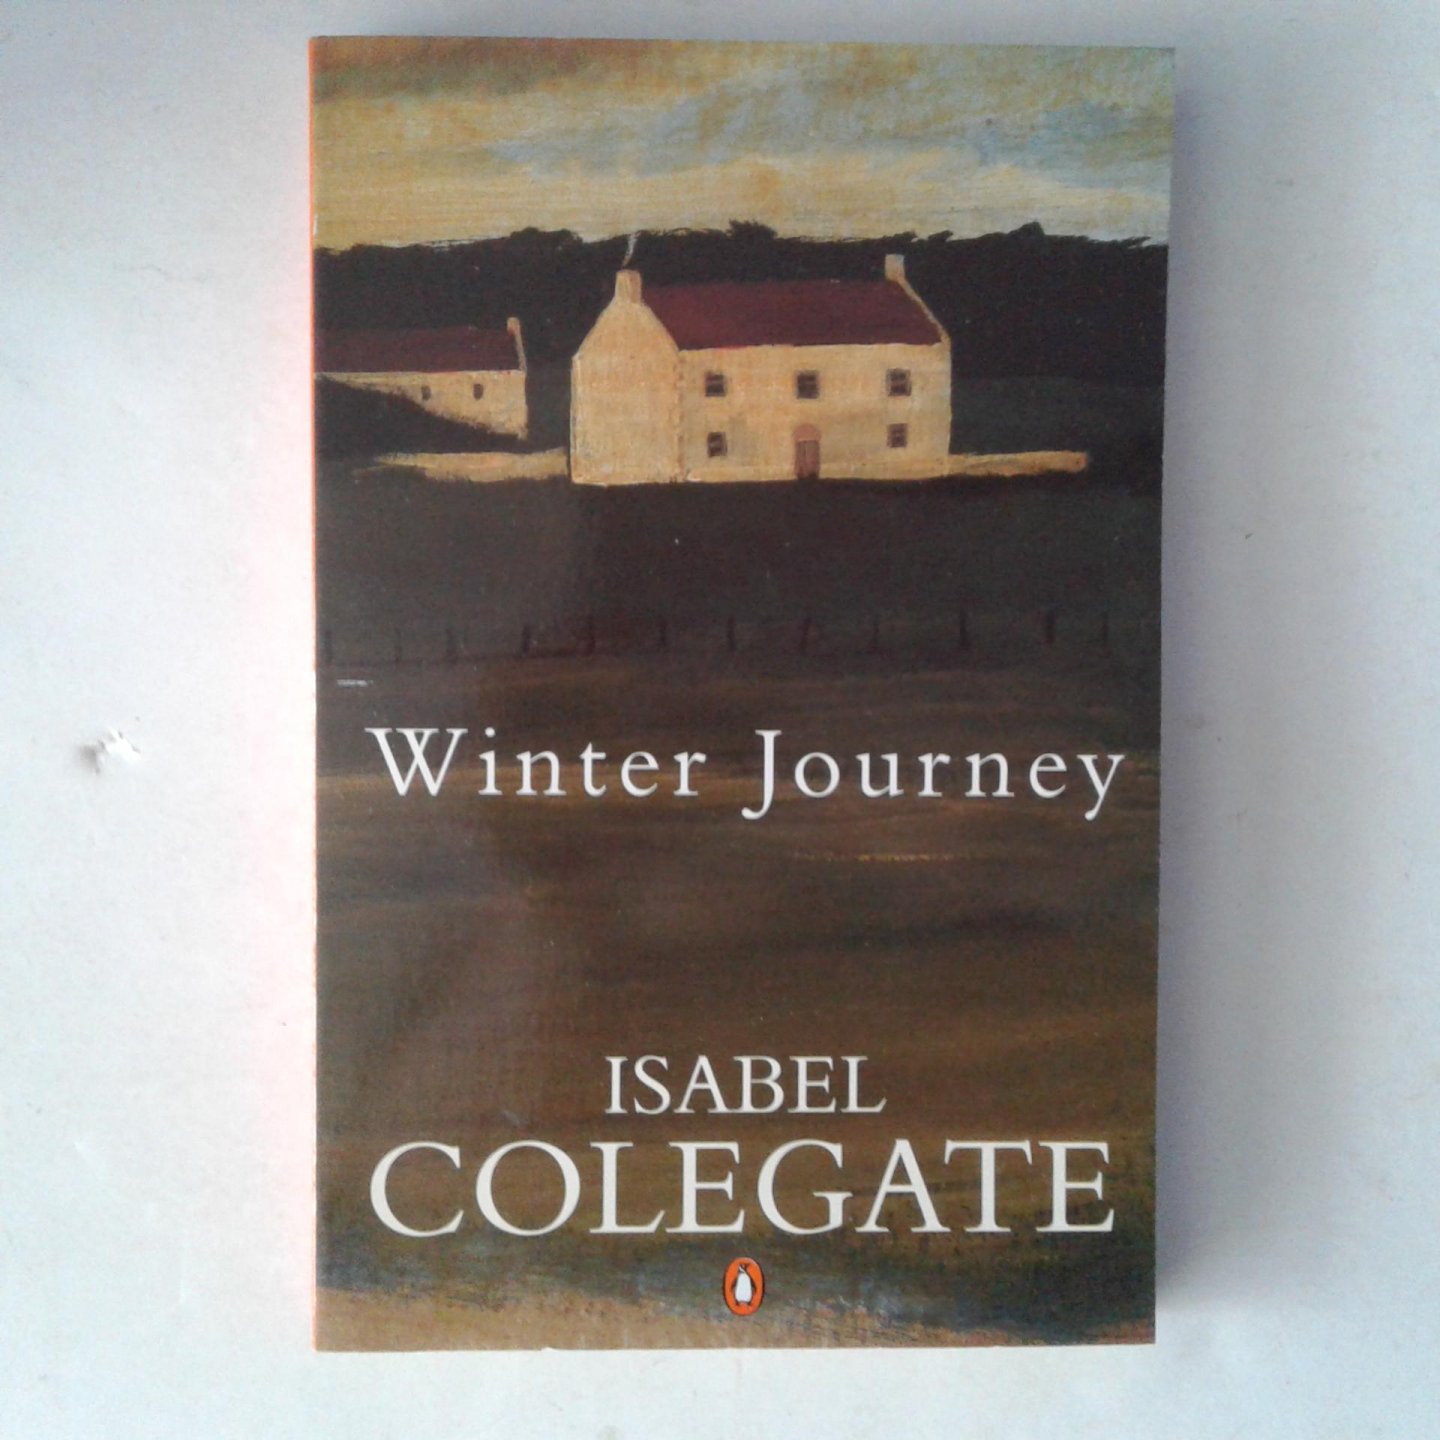 Colgate, Isabel - Winter Journey